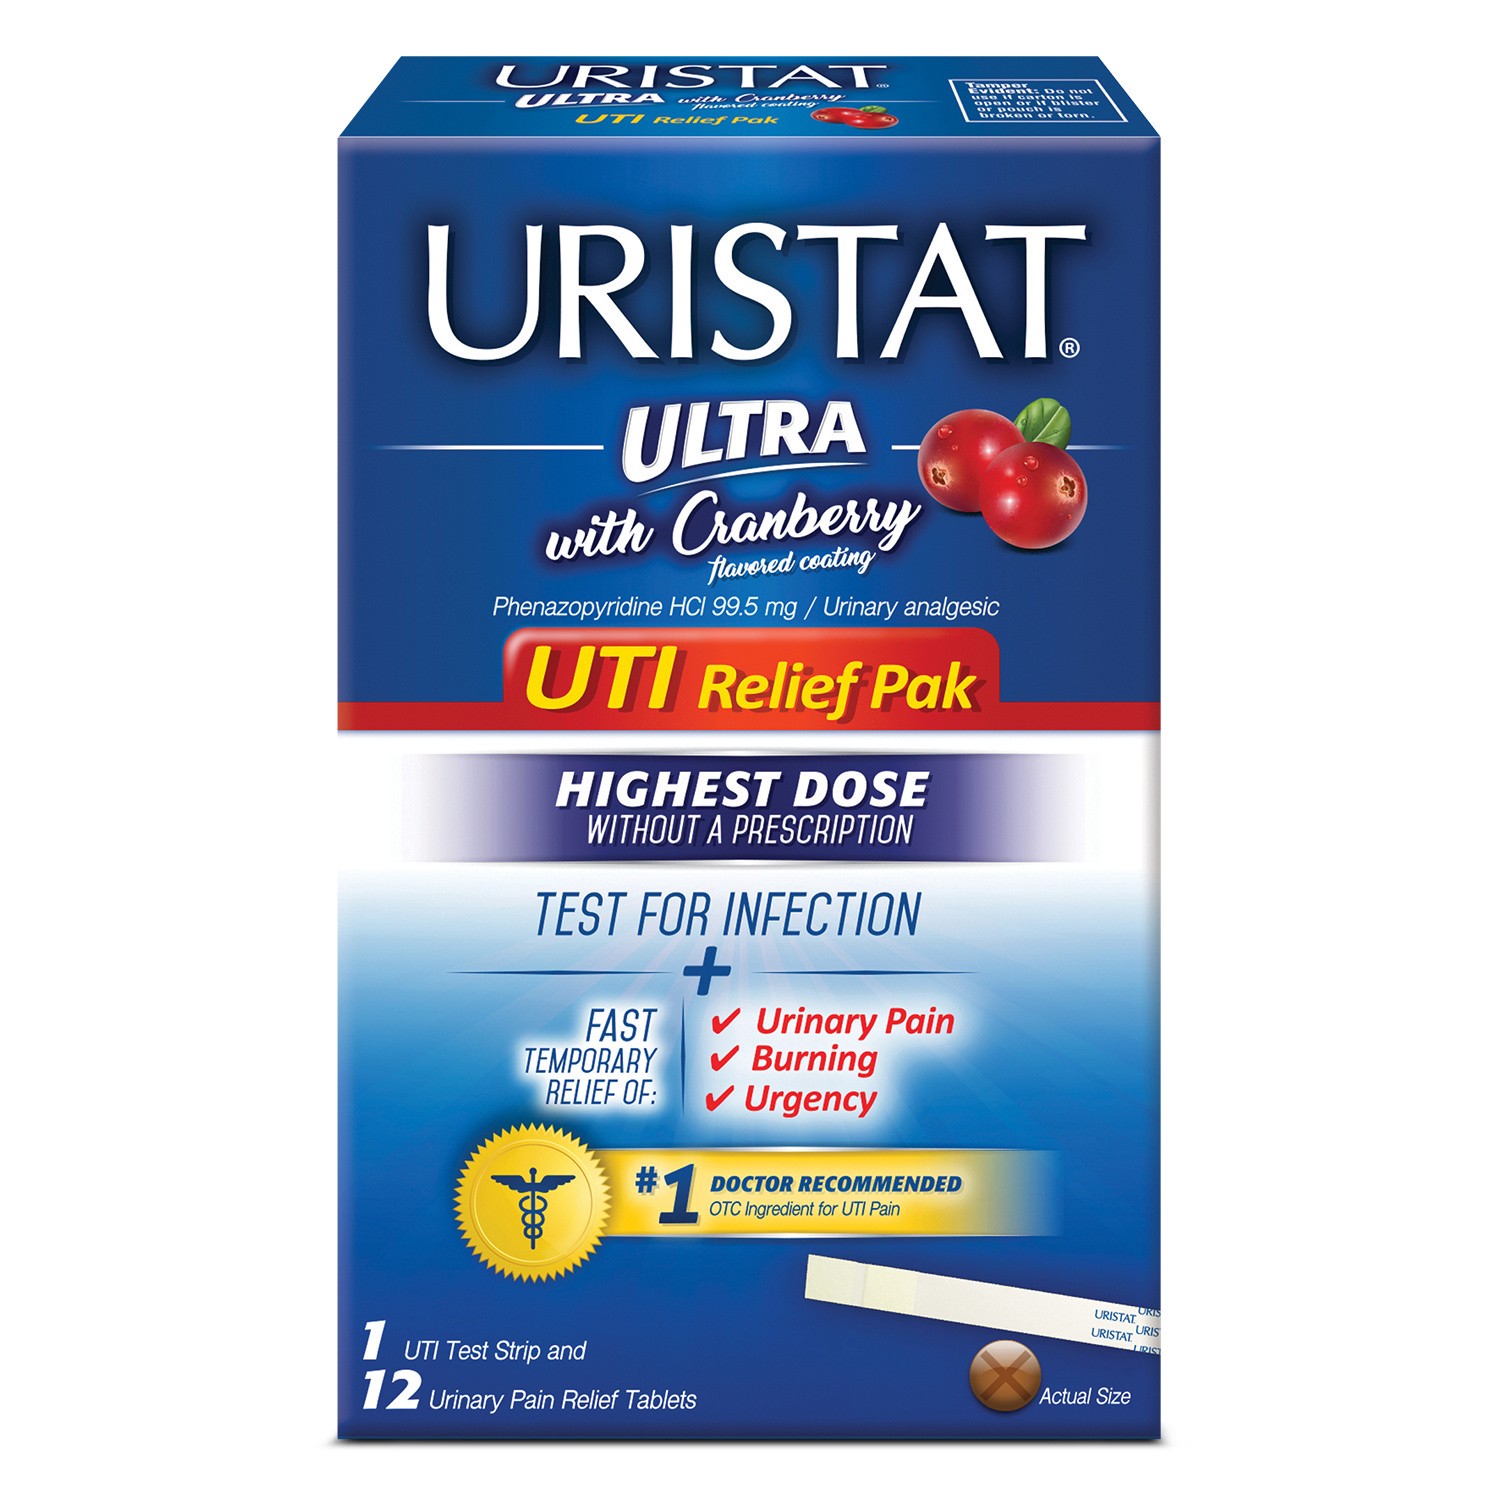 slide 1 of 2, URISTAT Ultra UTI Relief Pak, UTI Treatment for Women and Men, 1 UTI Test Strip and 12 UTI Treatment Tablets, 1 Box, 12 ct